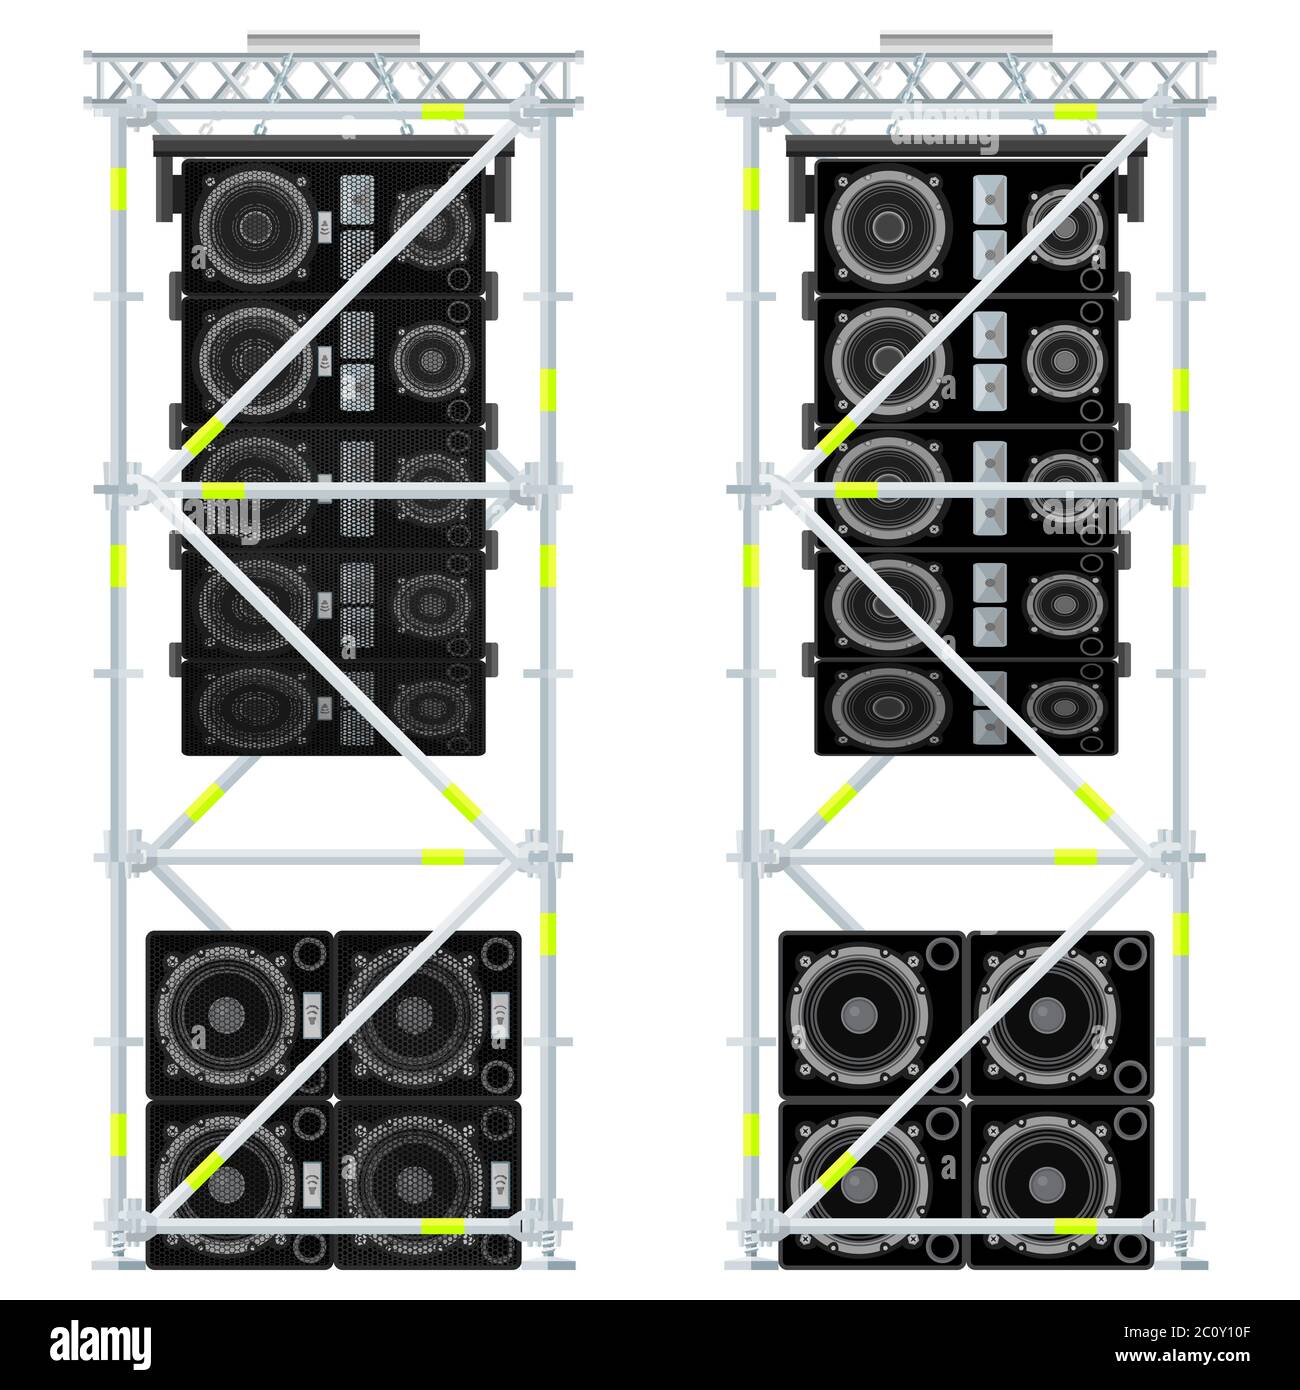 line array concert acoustics scaffold illustration Stock Photo